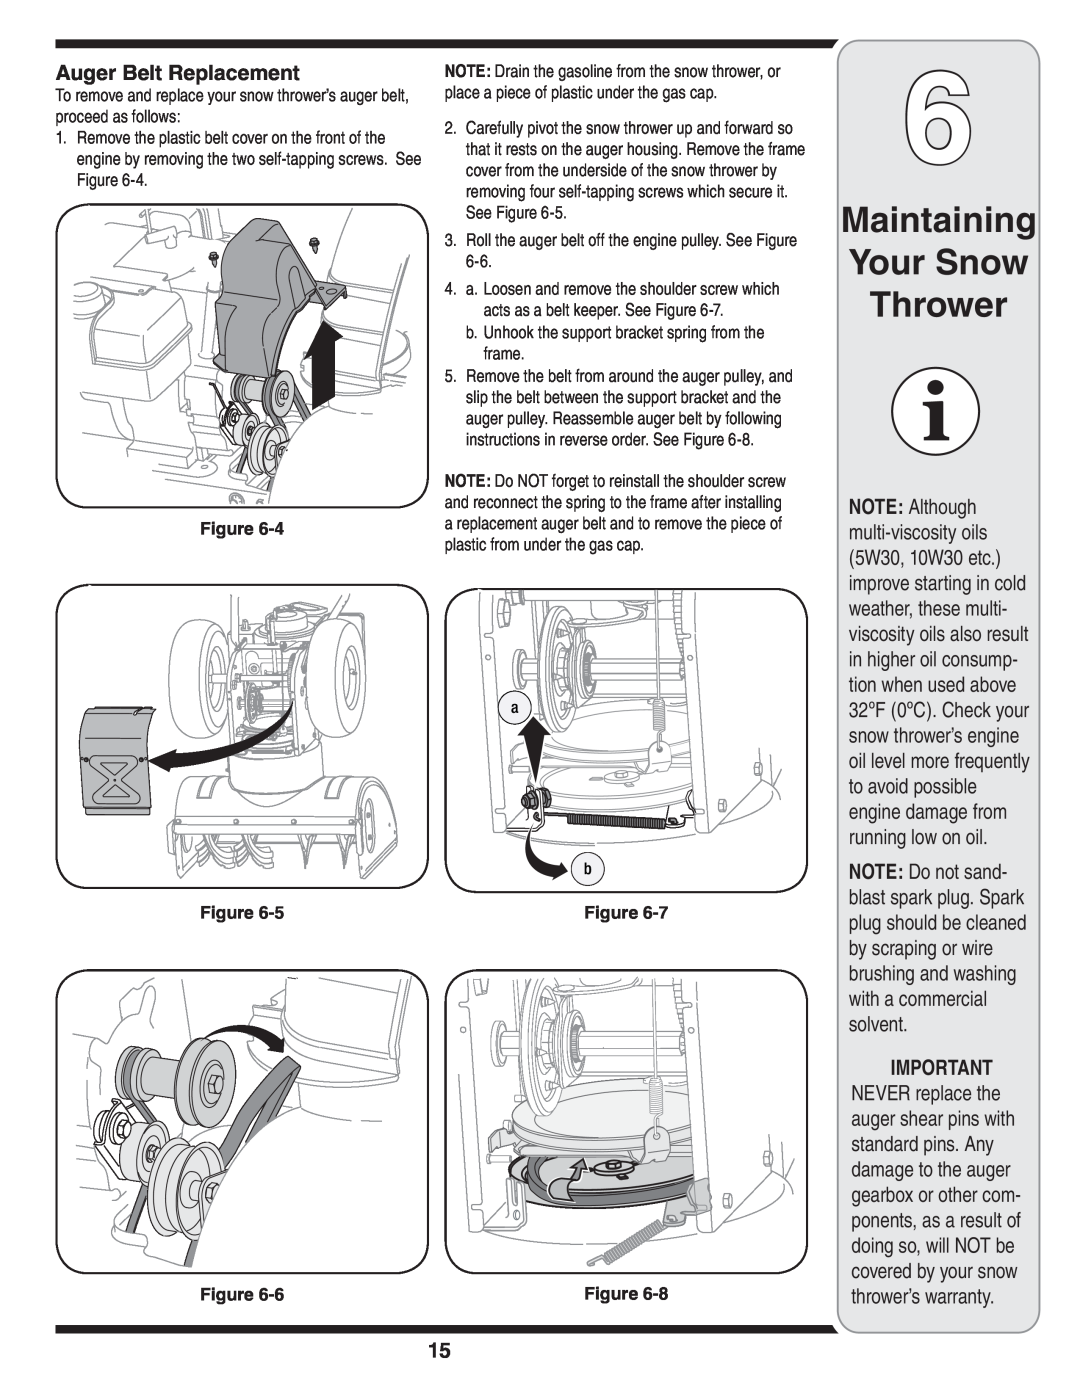 MTD 769-03250 warranty Maintaining Your Snow Thrower, Auger Belt Replacement, Figure Figure Figure 